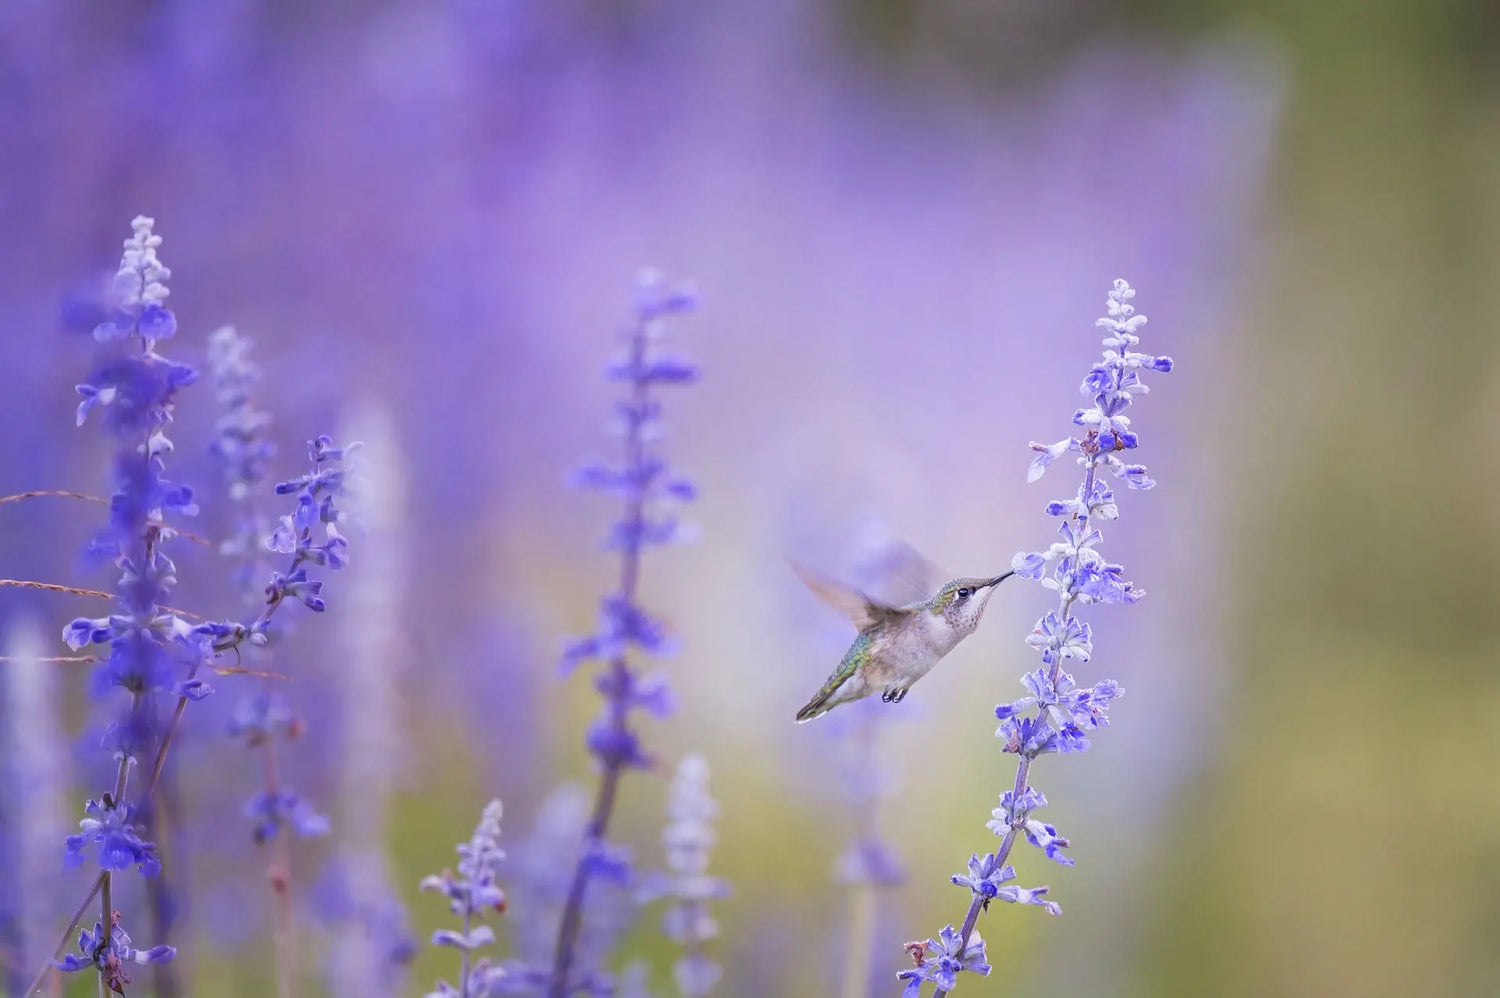 Hummingbird eating nectar from blue flower.